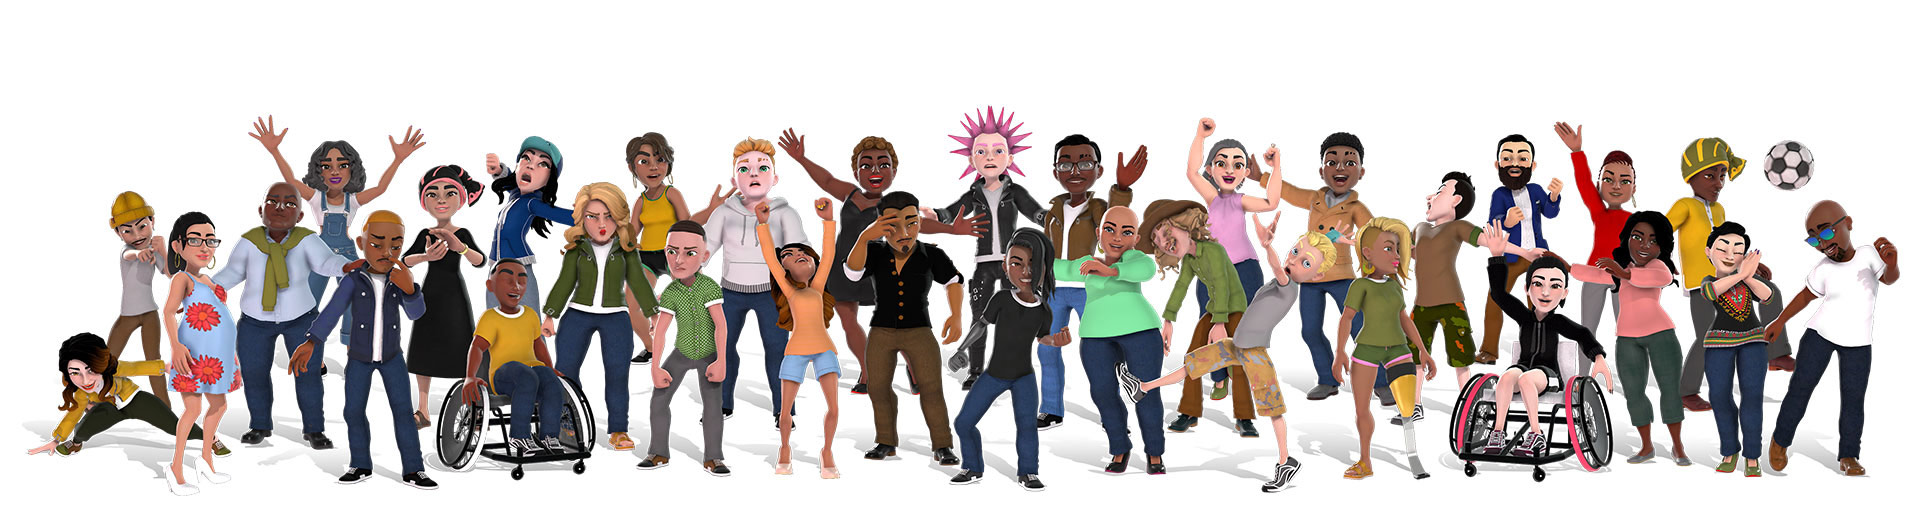 Xbox 虛擬人偶，顯示穿著不同服裝、各種族群的人們